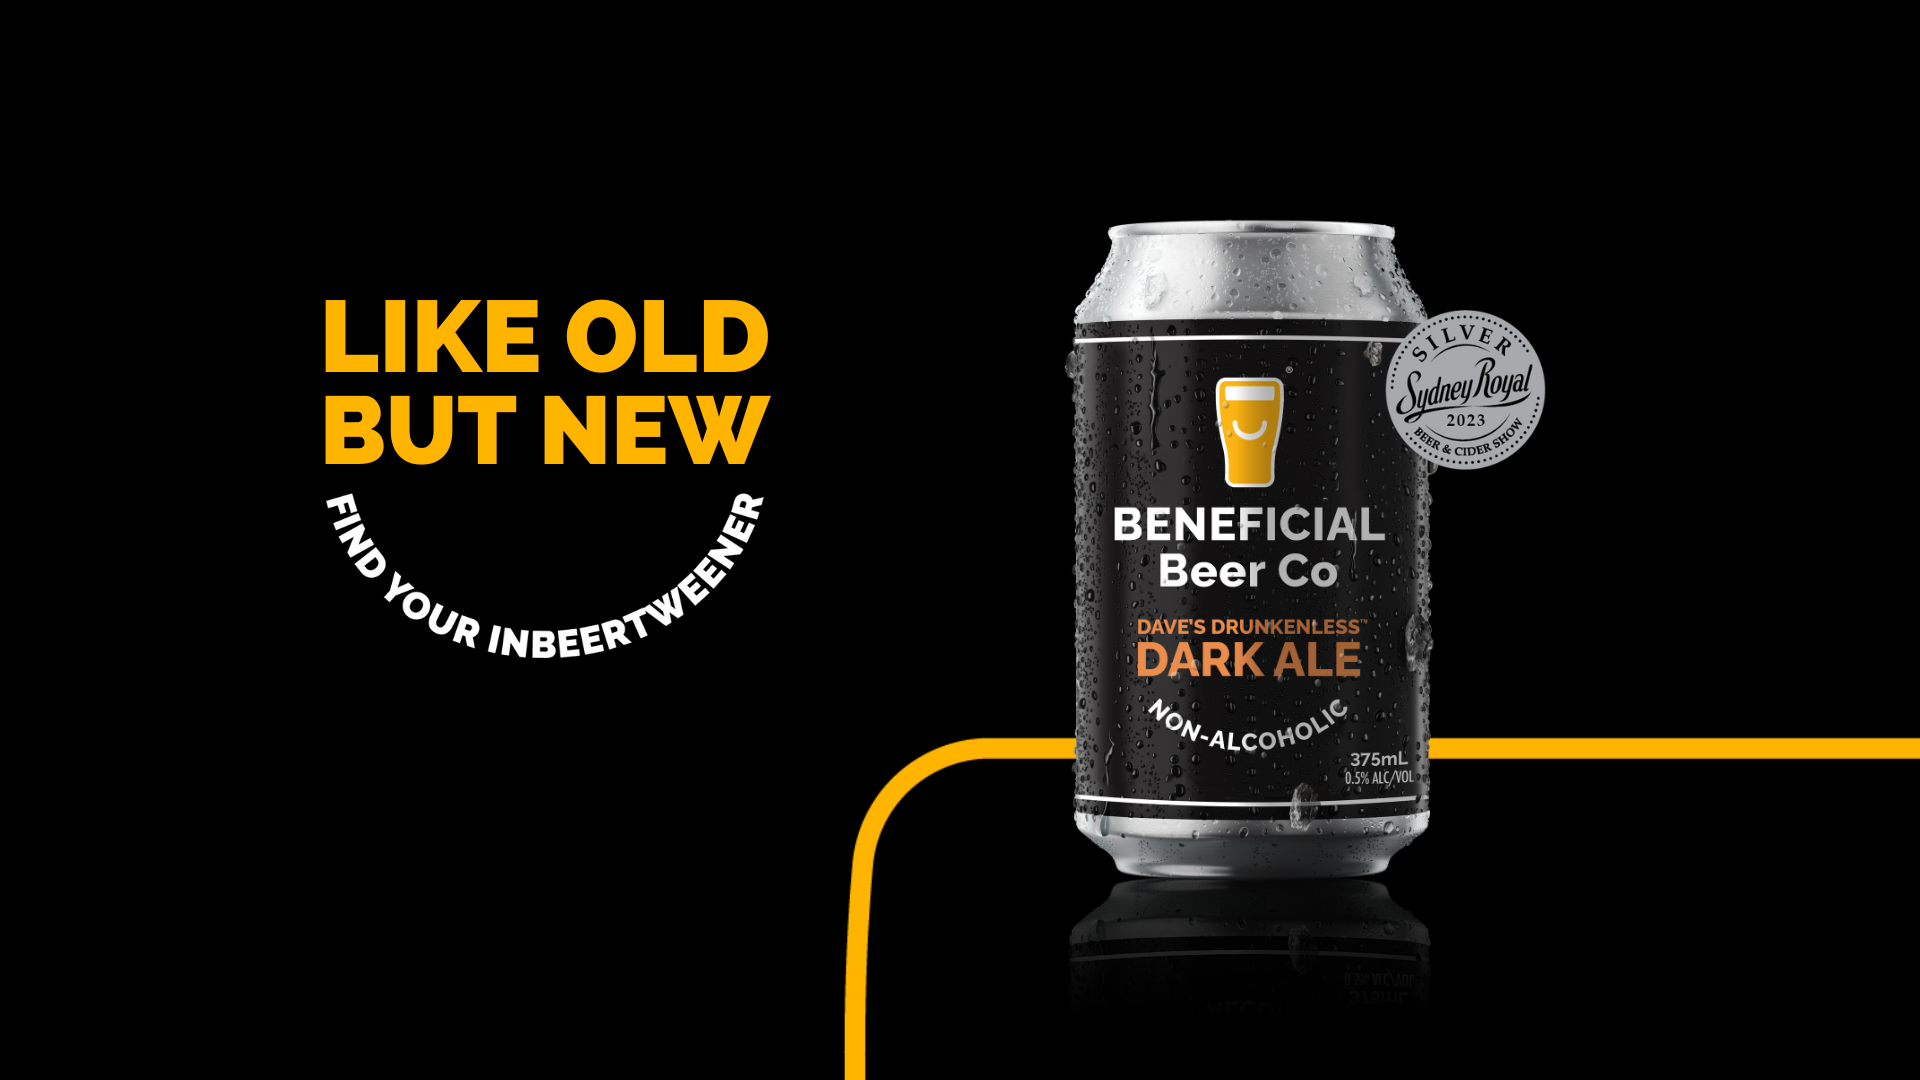 Dave’s Drunkenless Dark Ale - Non Alcoholic Beer